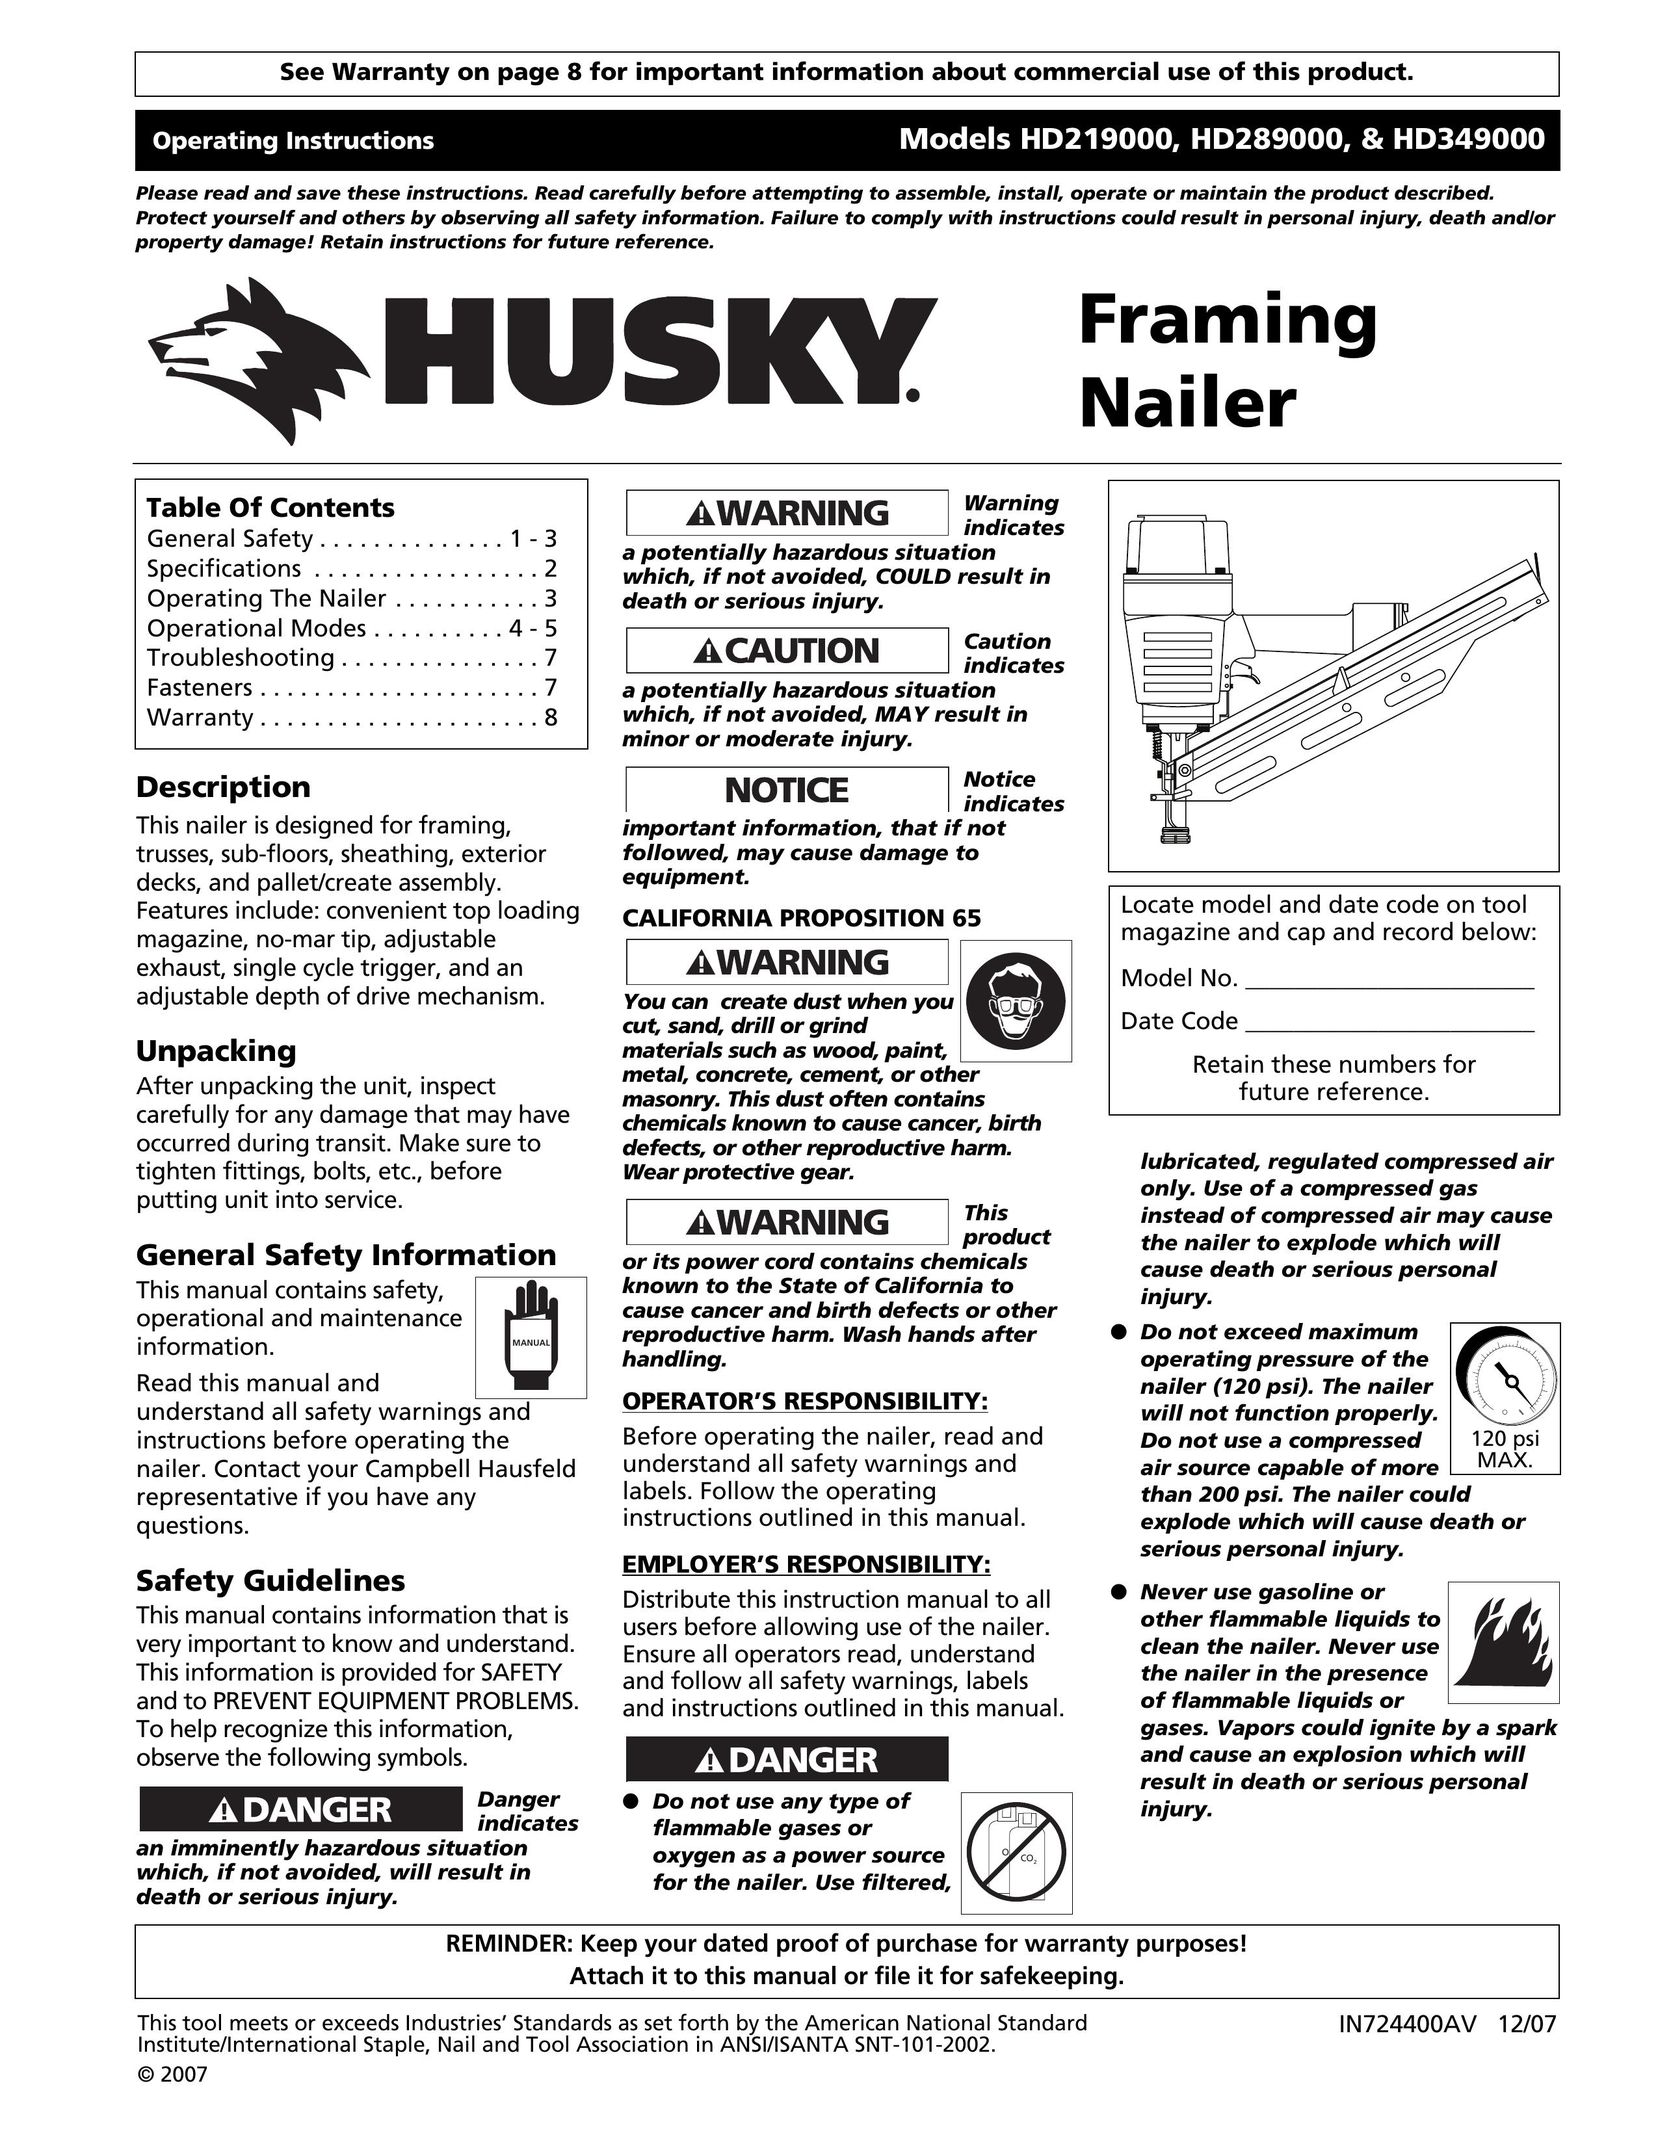 Husky & HD349000 Nail Gun User Manual